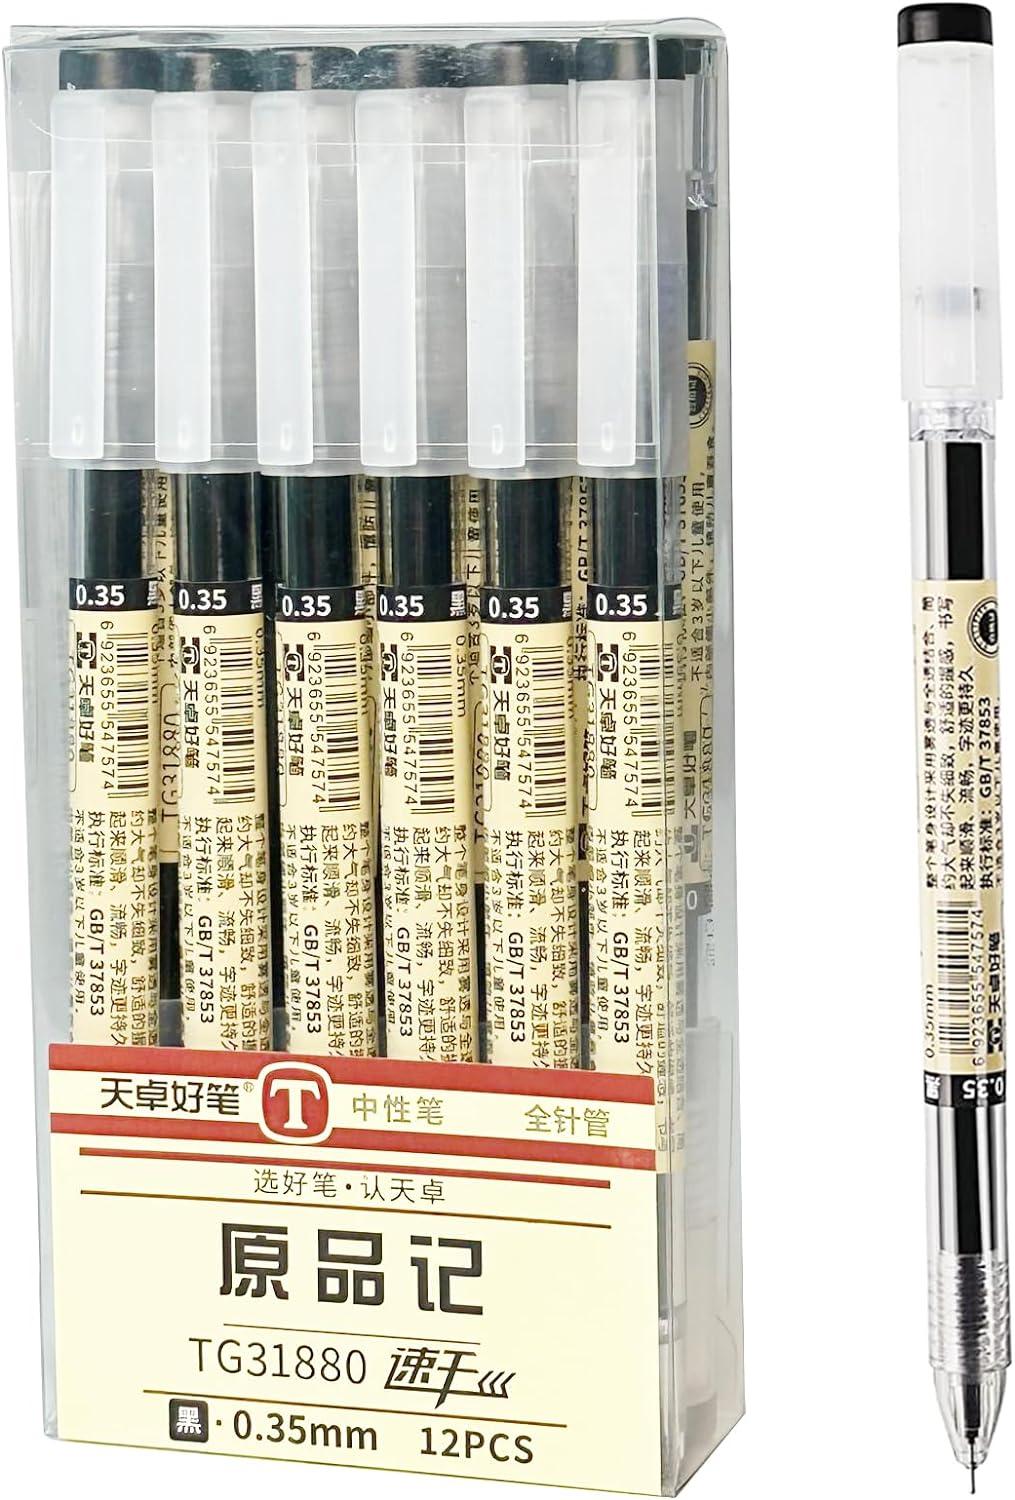 penagic pen japanese pens ink pen 0 35 mm fine point pens black gel pens  penagic b0b85j7cmy